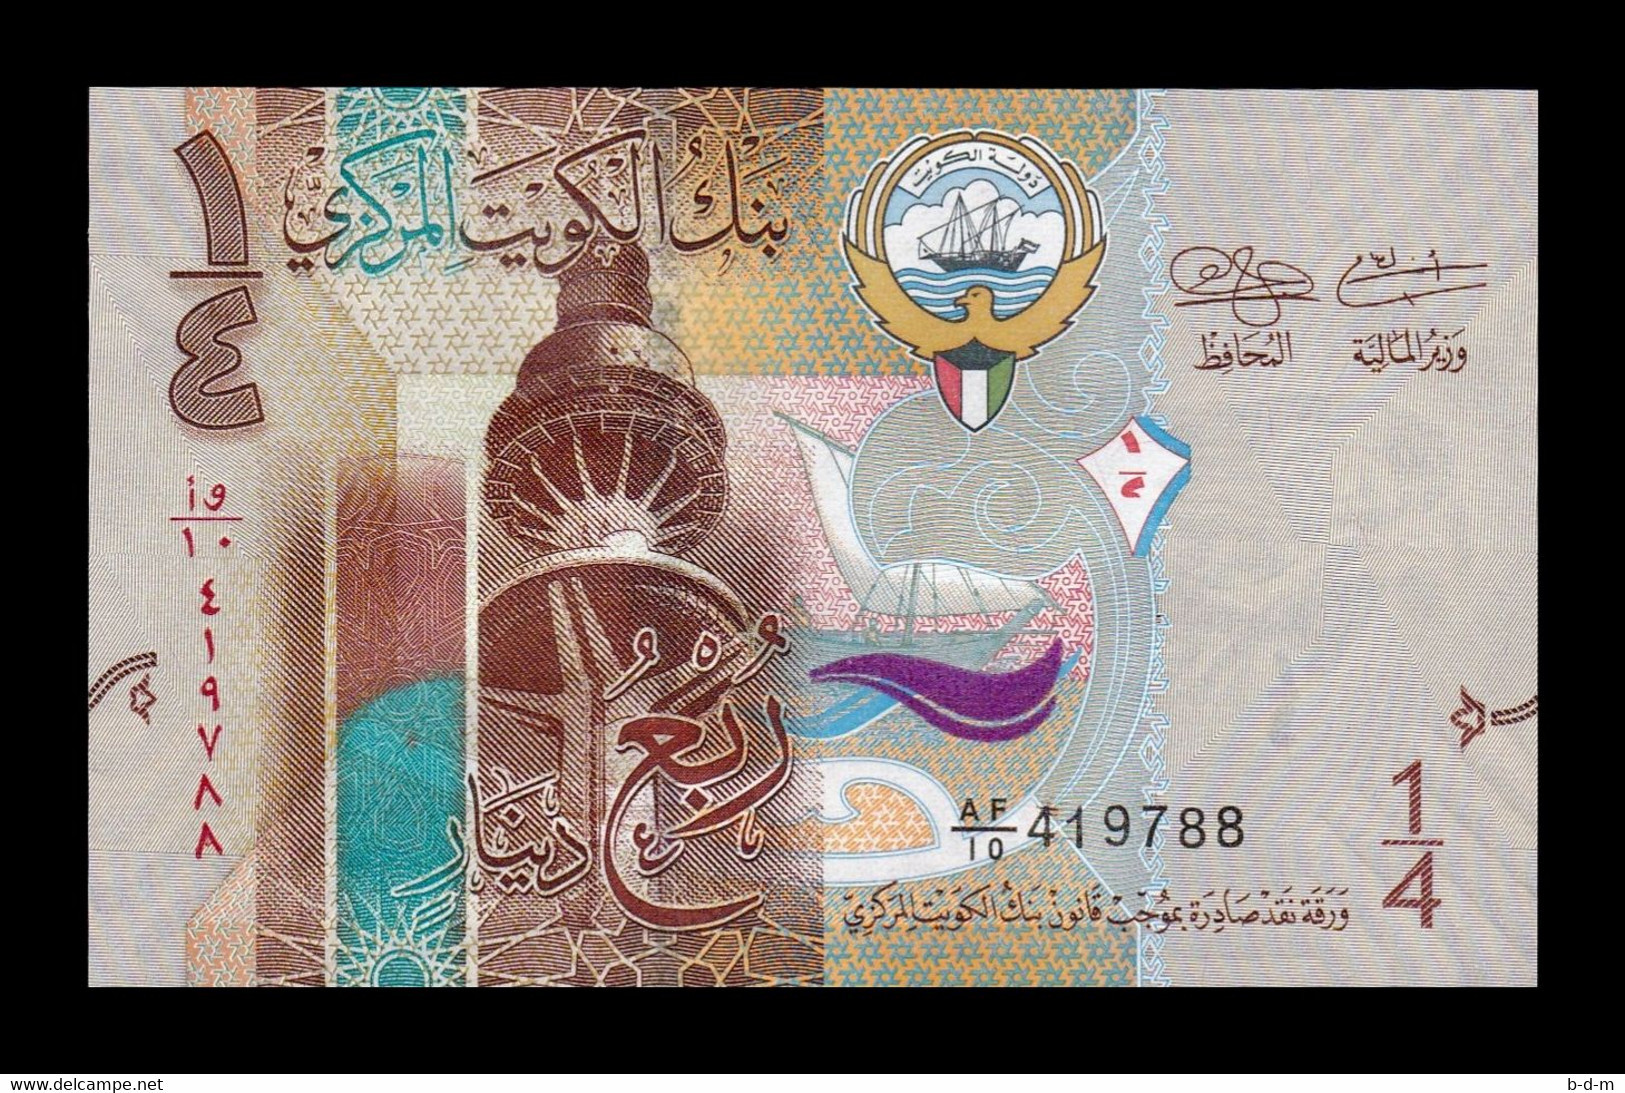 Kuwait 1/4 Dinar 2014 Pick 29 Sc Unc - Kuwait